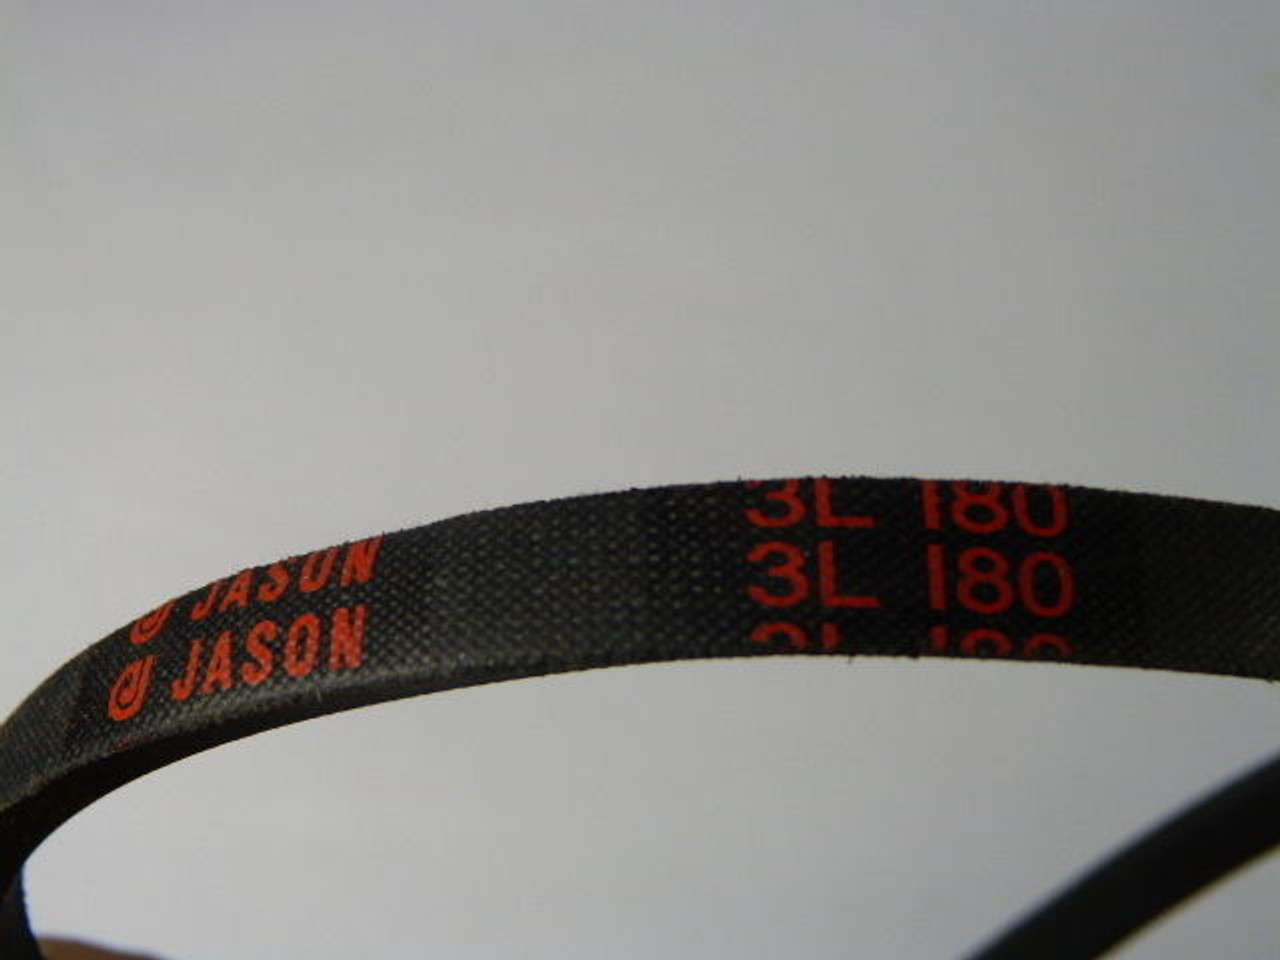 Jason 3L180 8400-1180 Truflex V-Belt .38 x .22 x 15 inch ! NOP !